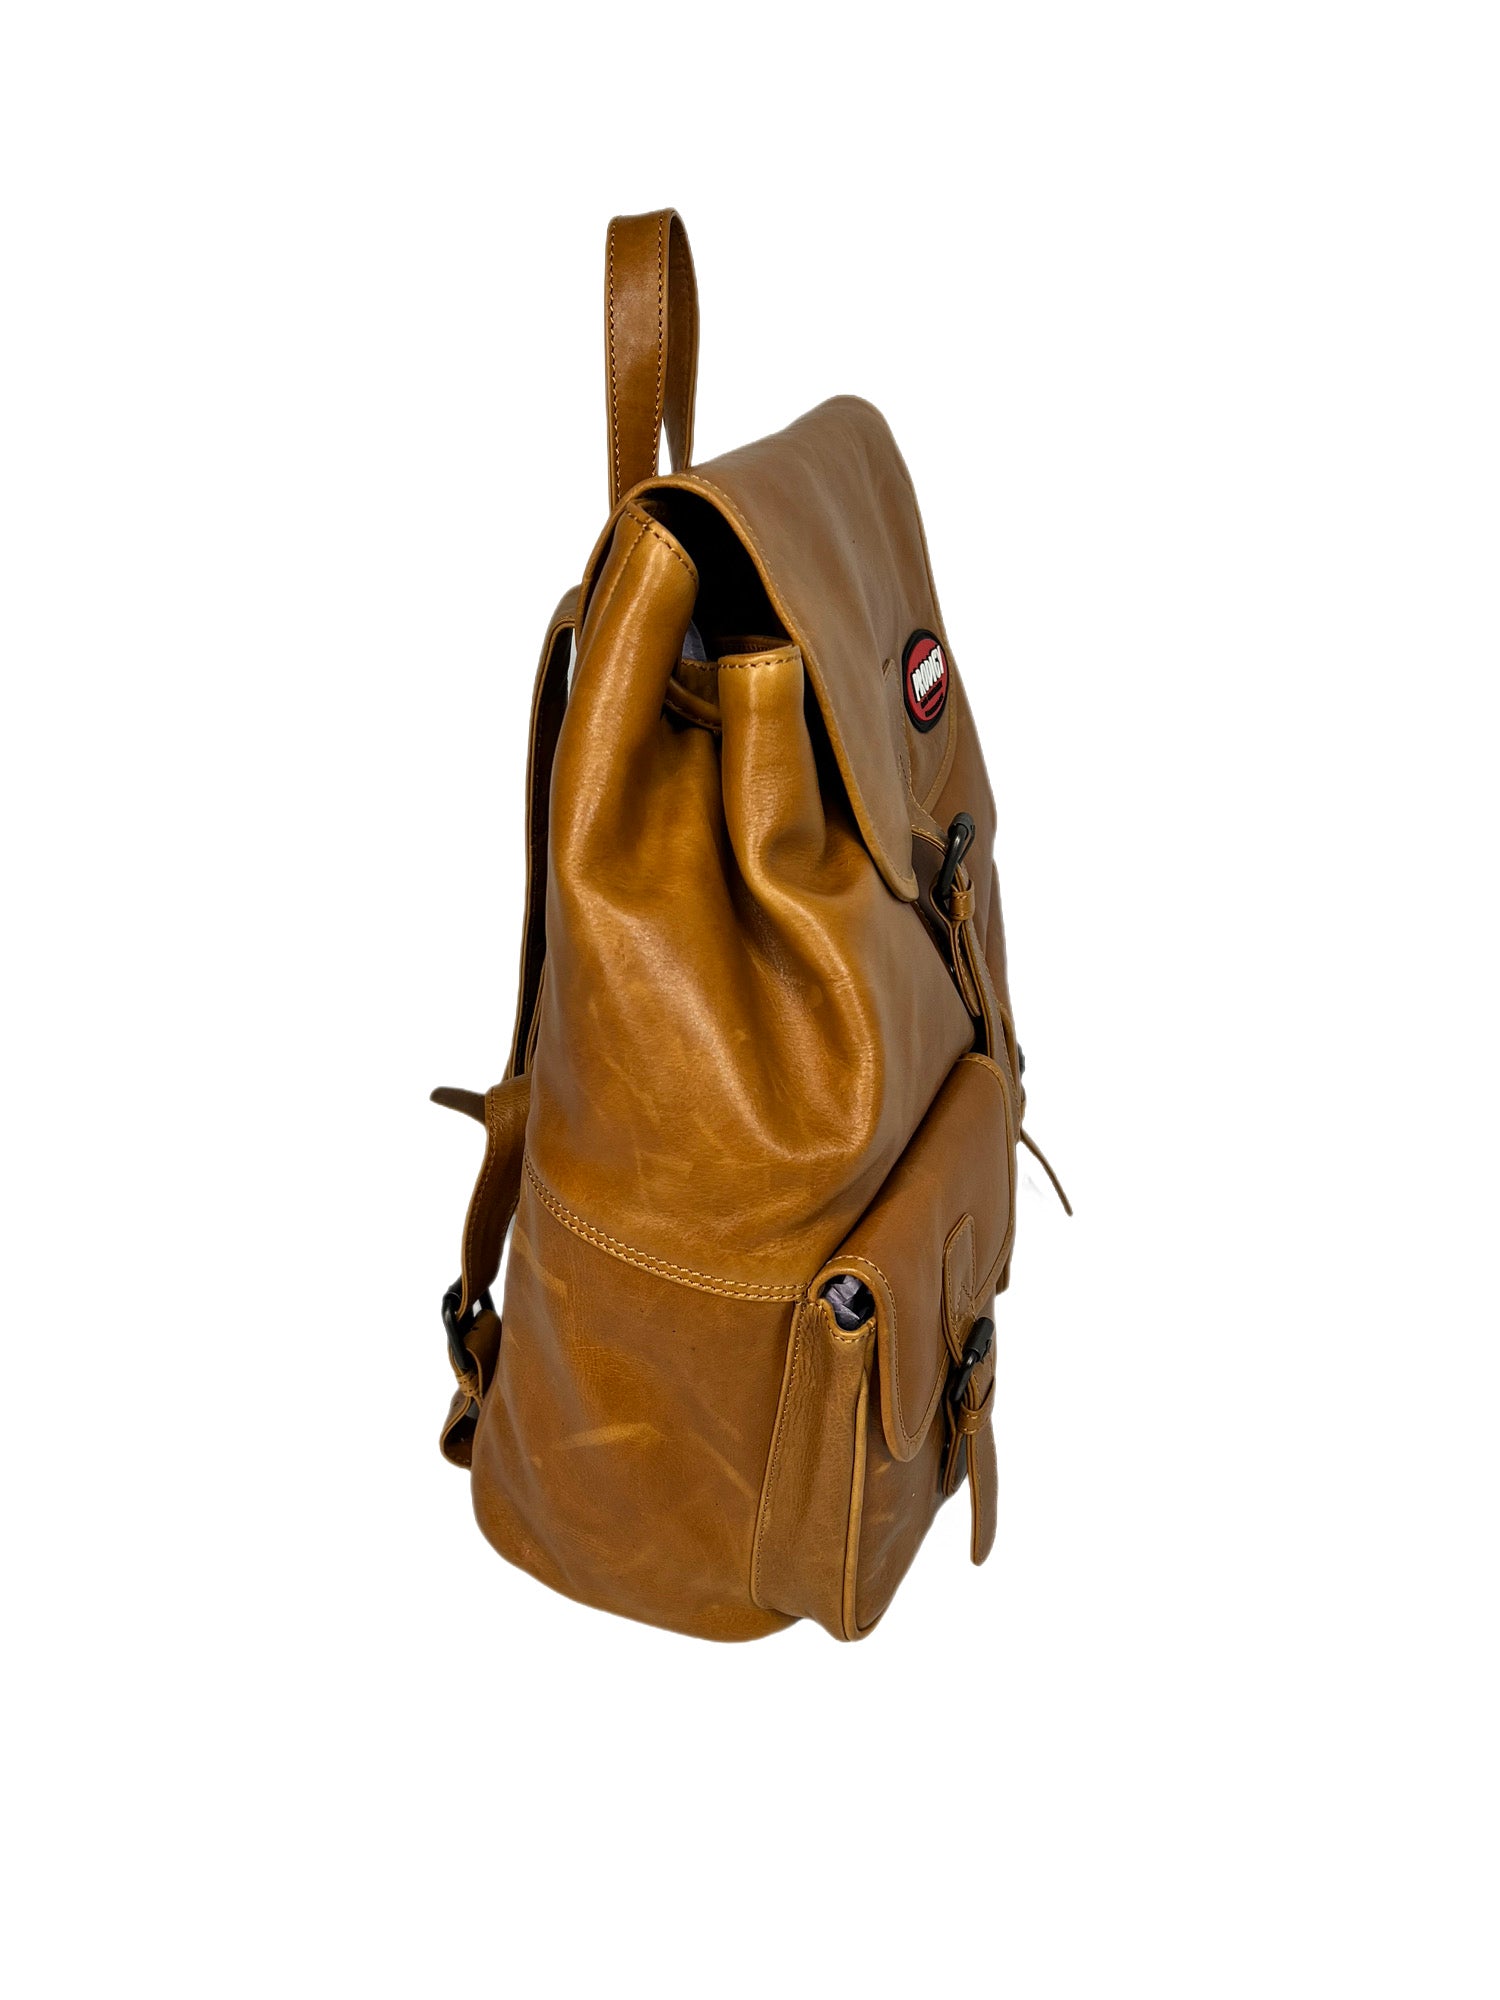 Vanguard Leather Rucksack - Prodigy Bag Company